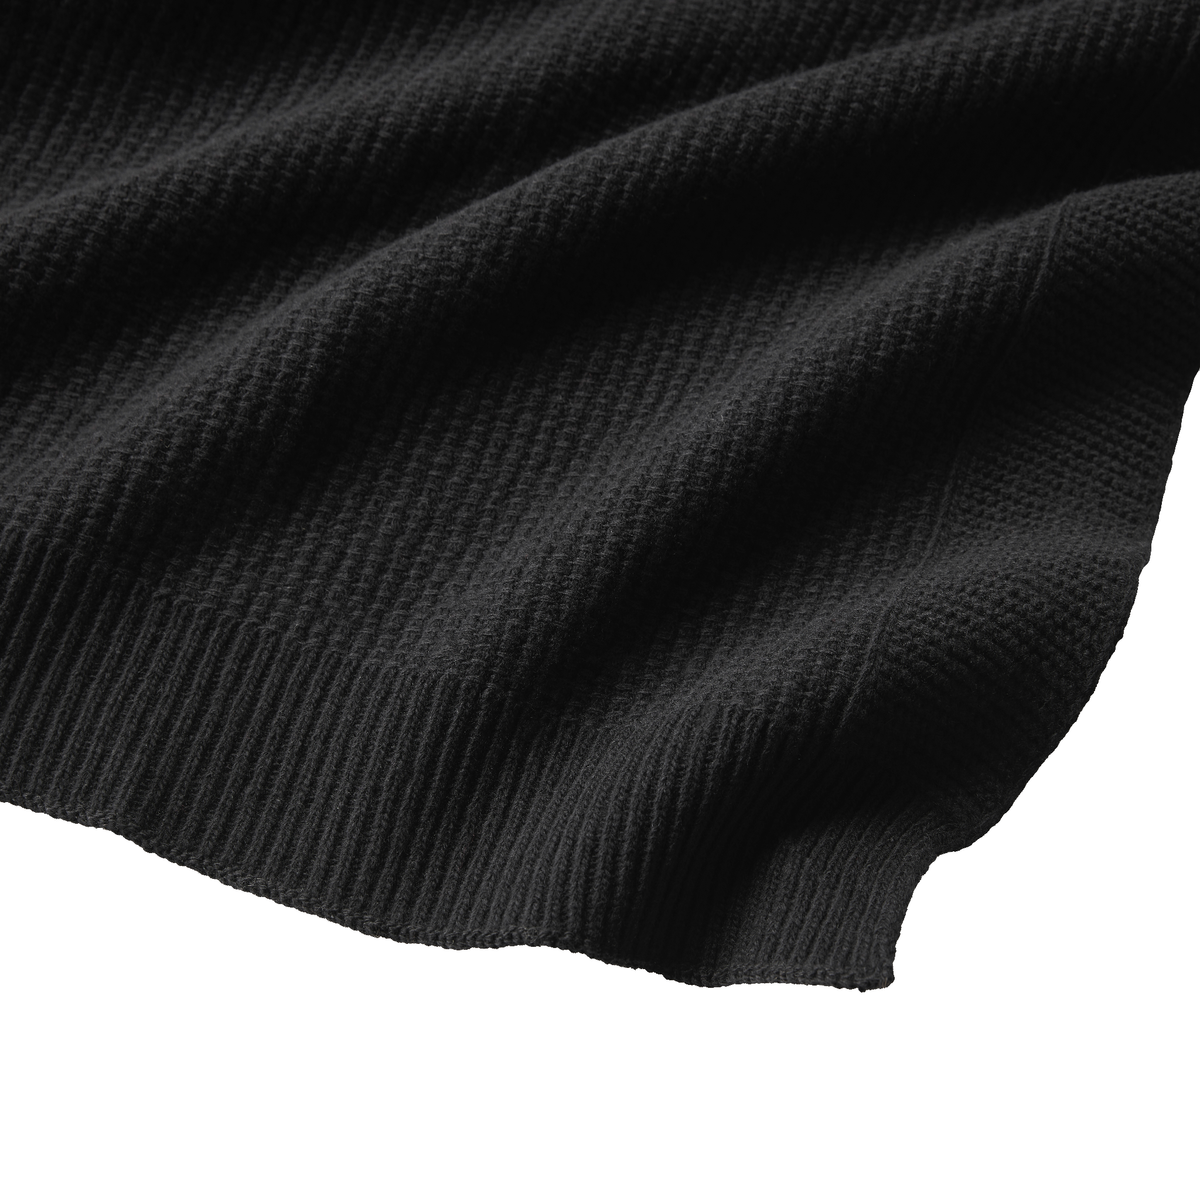 Detailed Image of Sferra Pettra Throw in Black Color